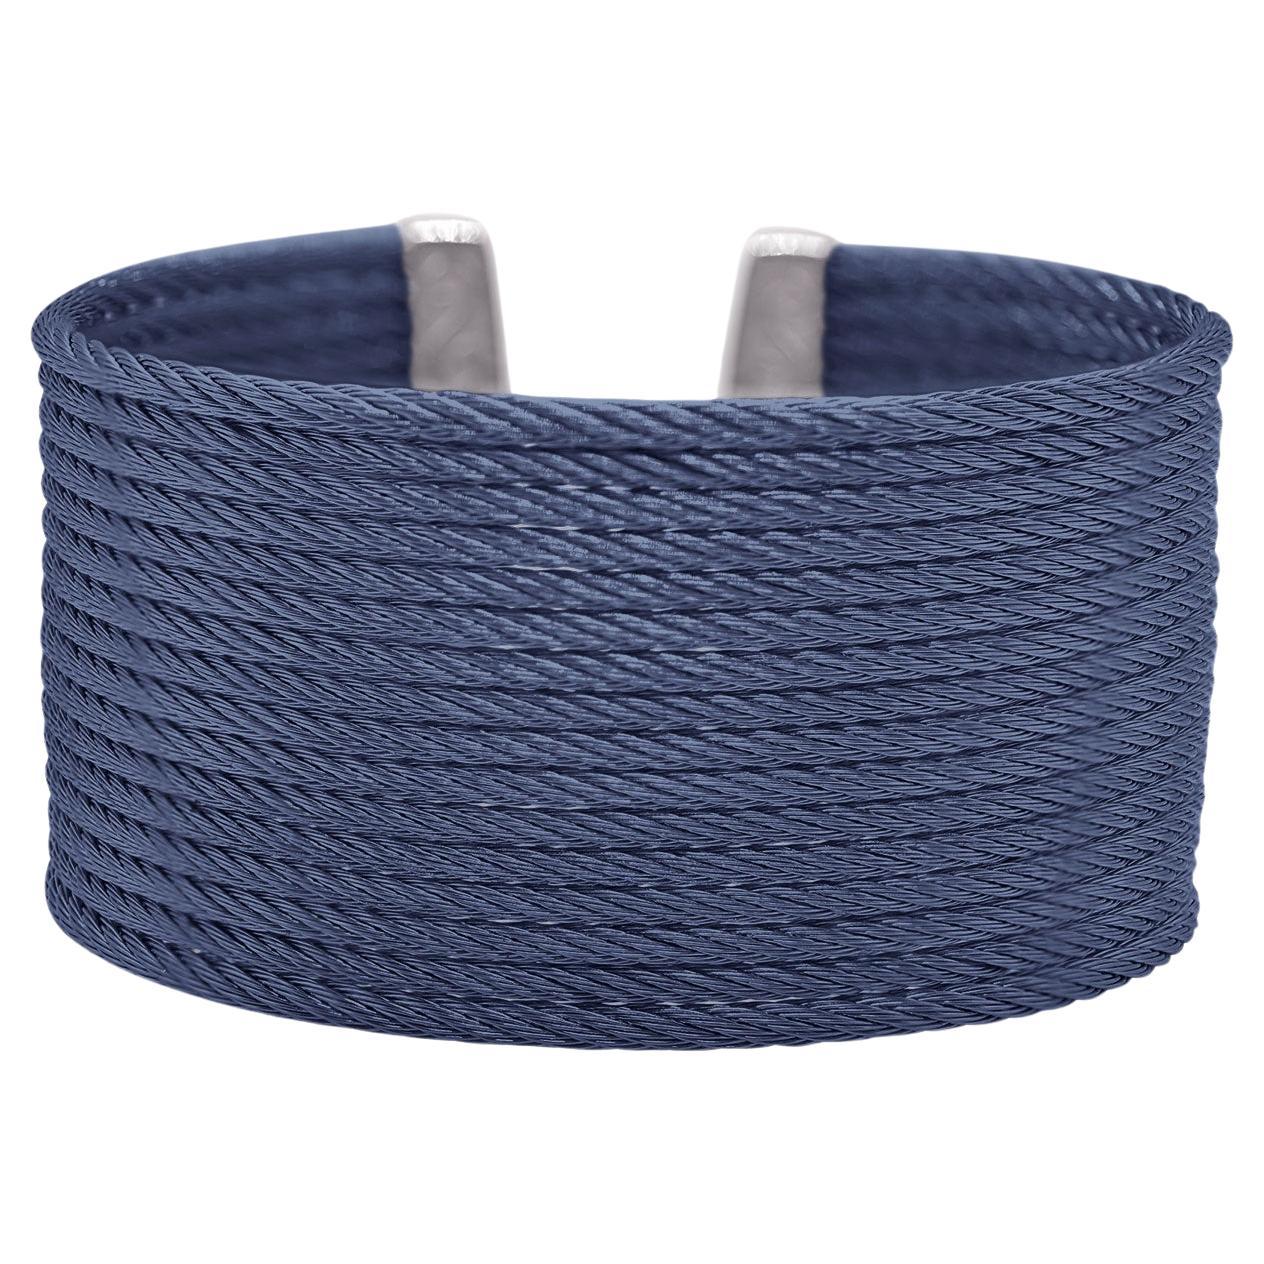 Alor Blueberry Cable Cuff Essentials 16-Row Cuff 